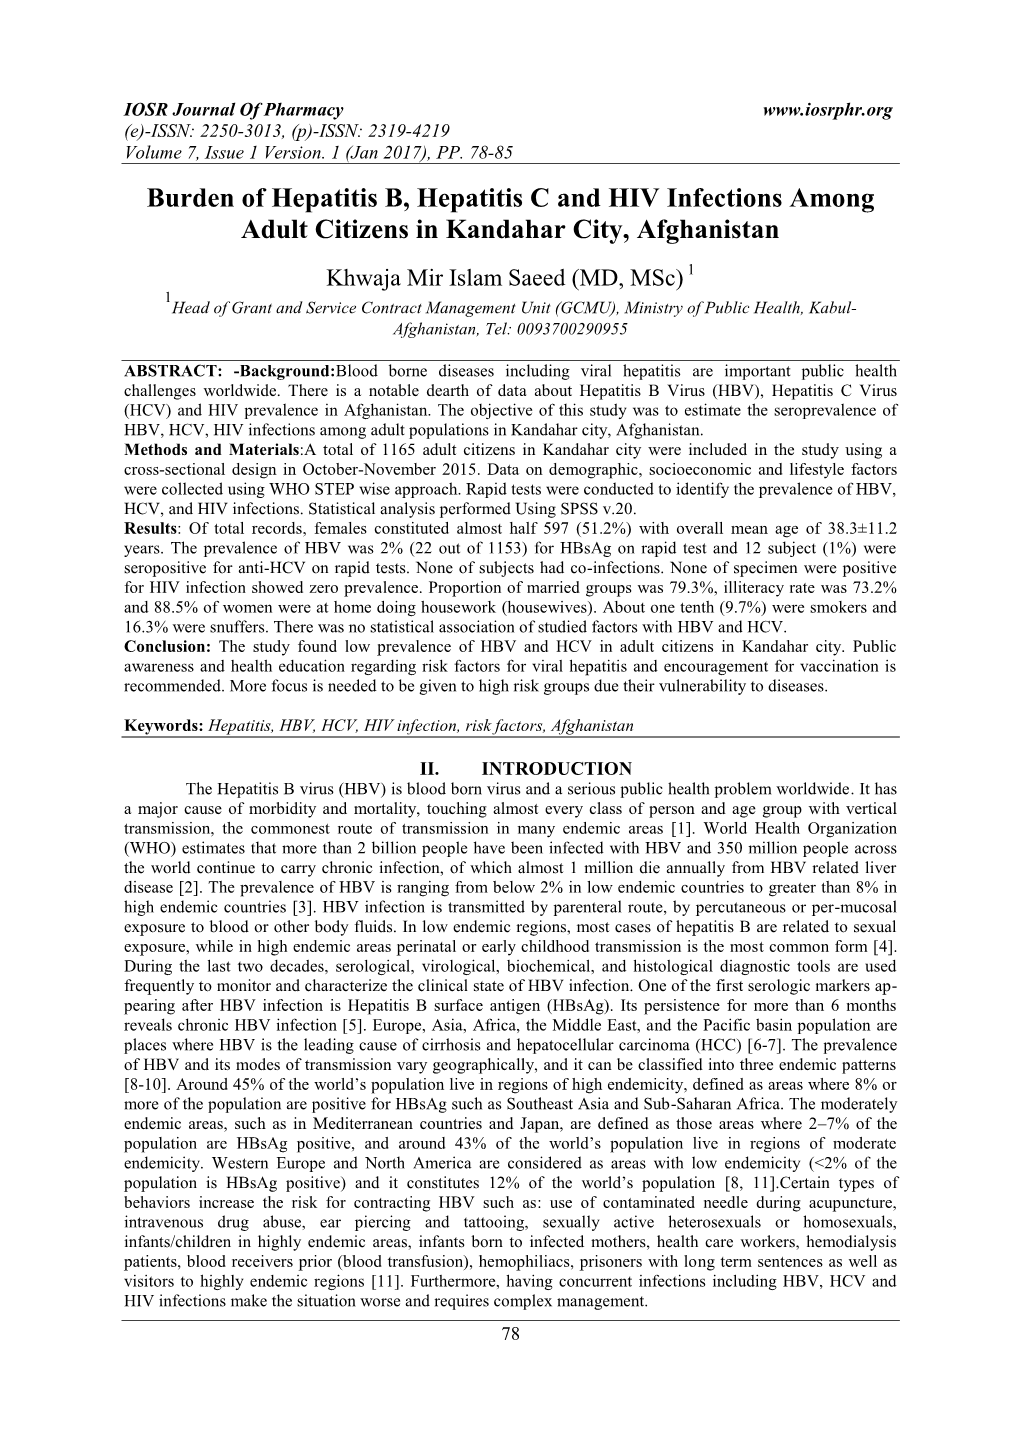 Burden of Hepatitis B, Hepatitis C and HIV Infections Among Adult Citizens in Kandahar City, Afghanistan